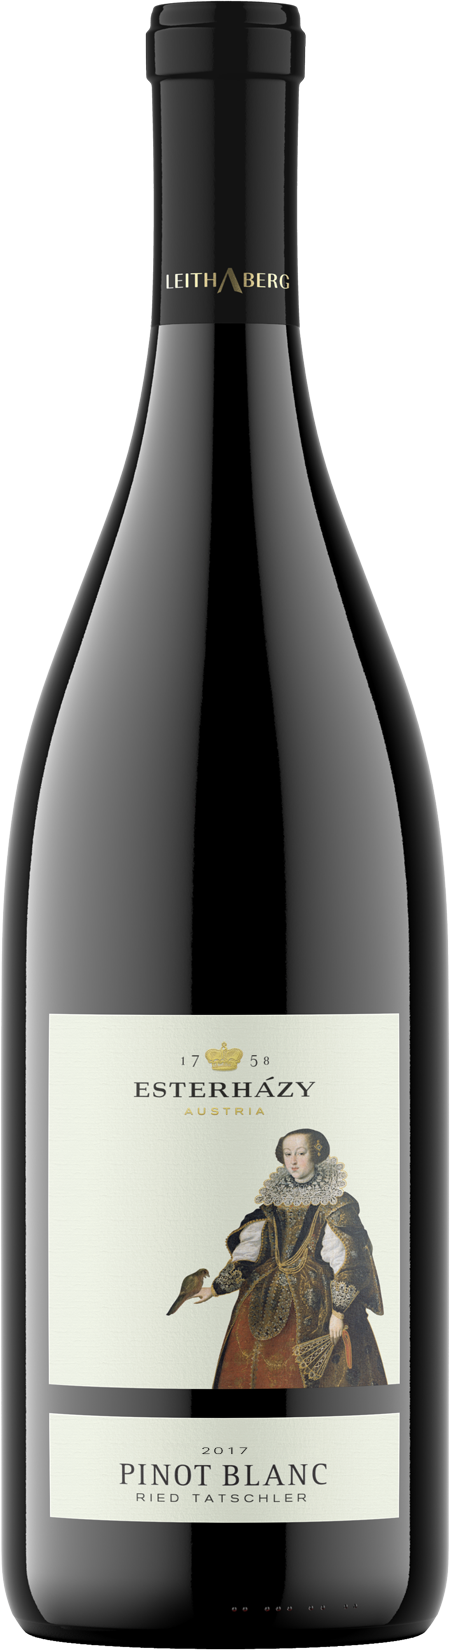 Esterhazy Pinot Blanc Tatschler DAC 2017 0.75 lt EW-Fl.